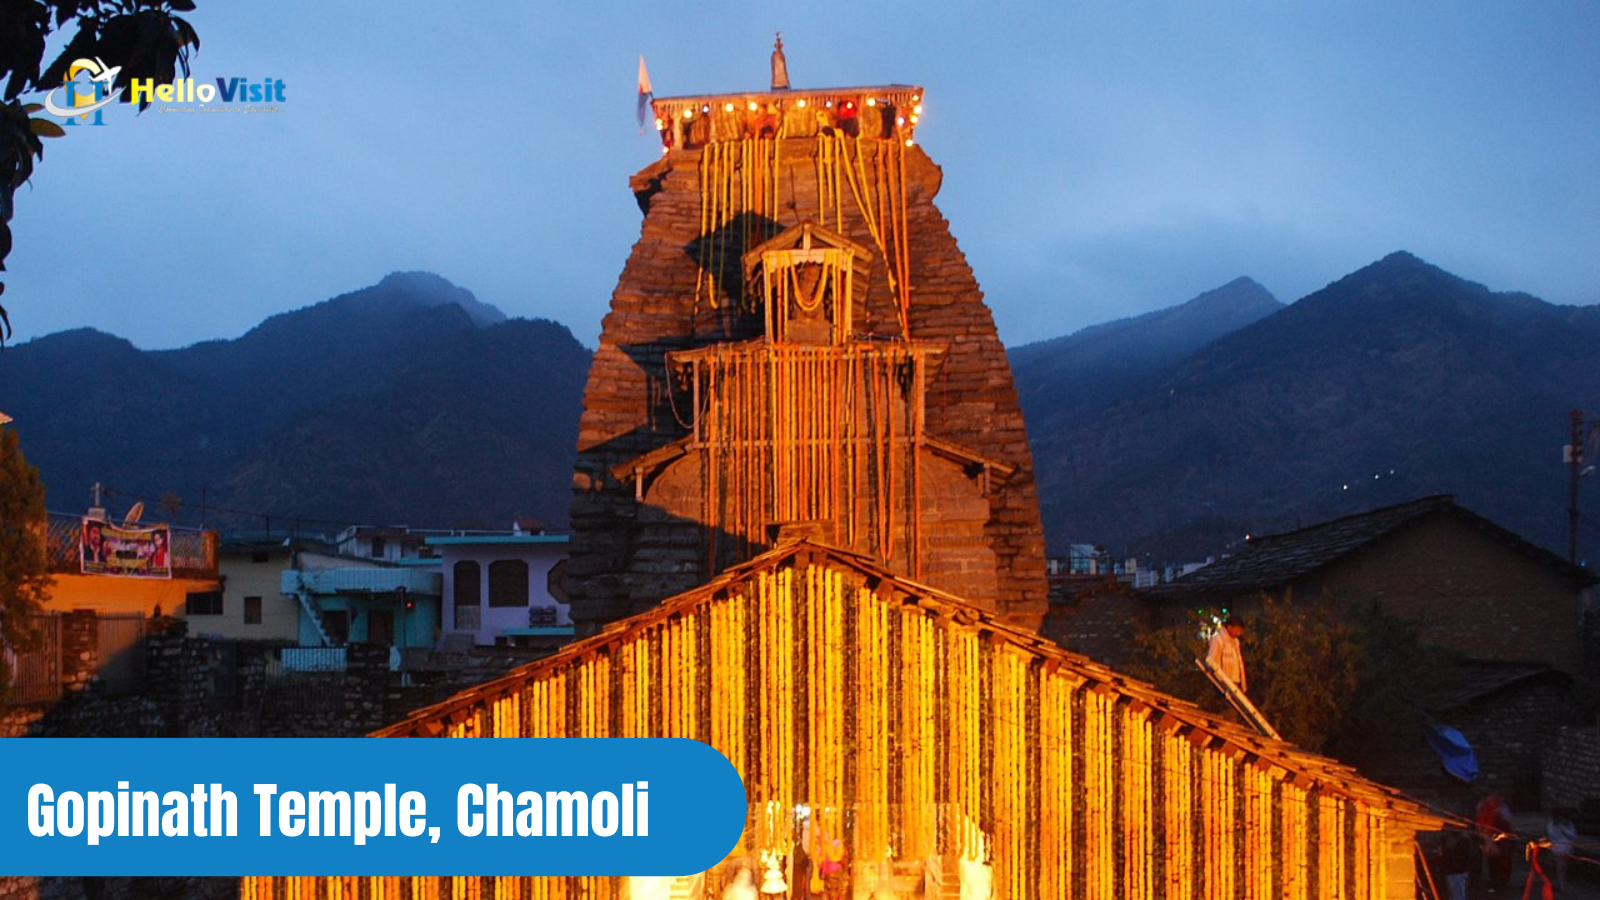 Gopinath Temple, Chamoli